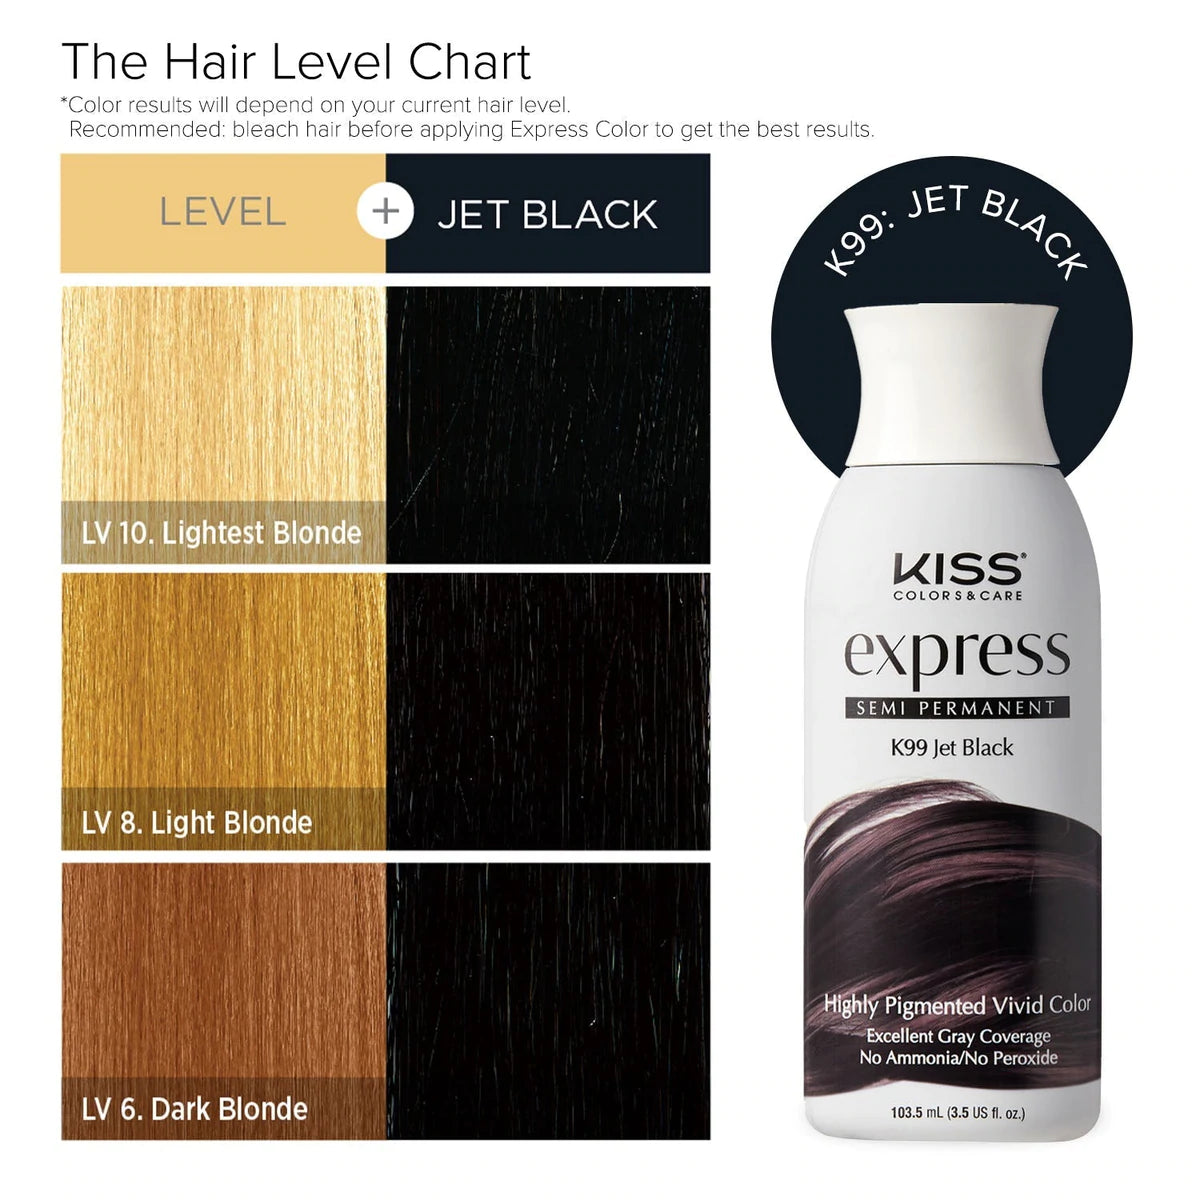 loreal jet black hair dye